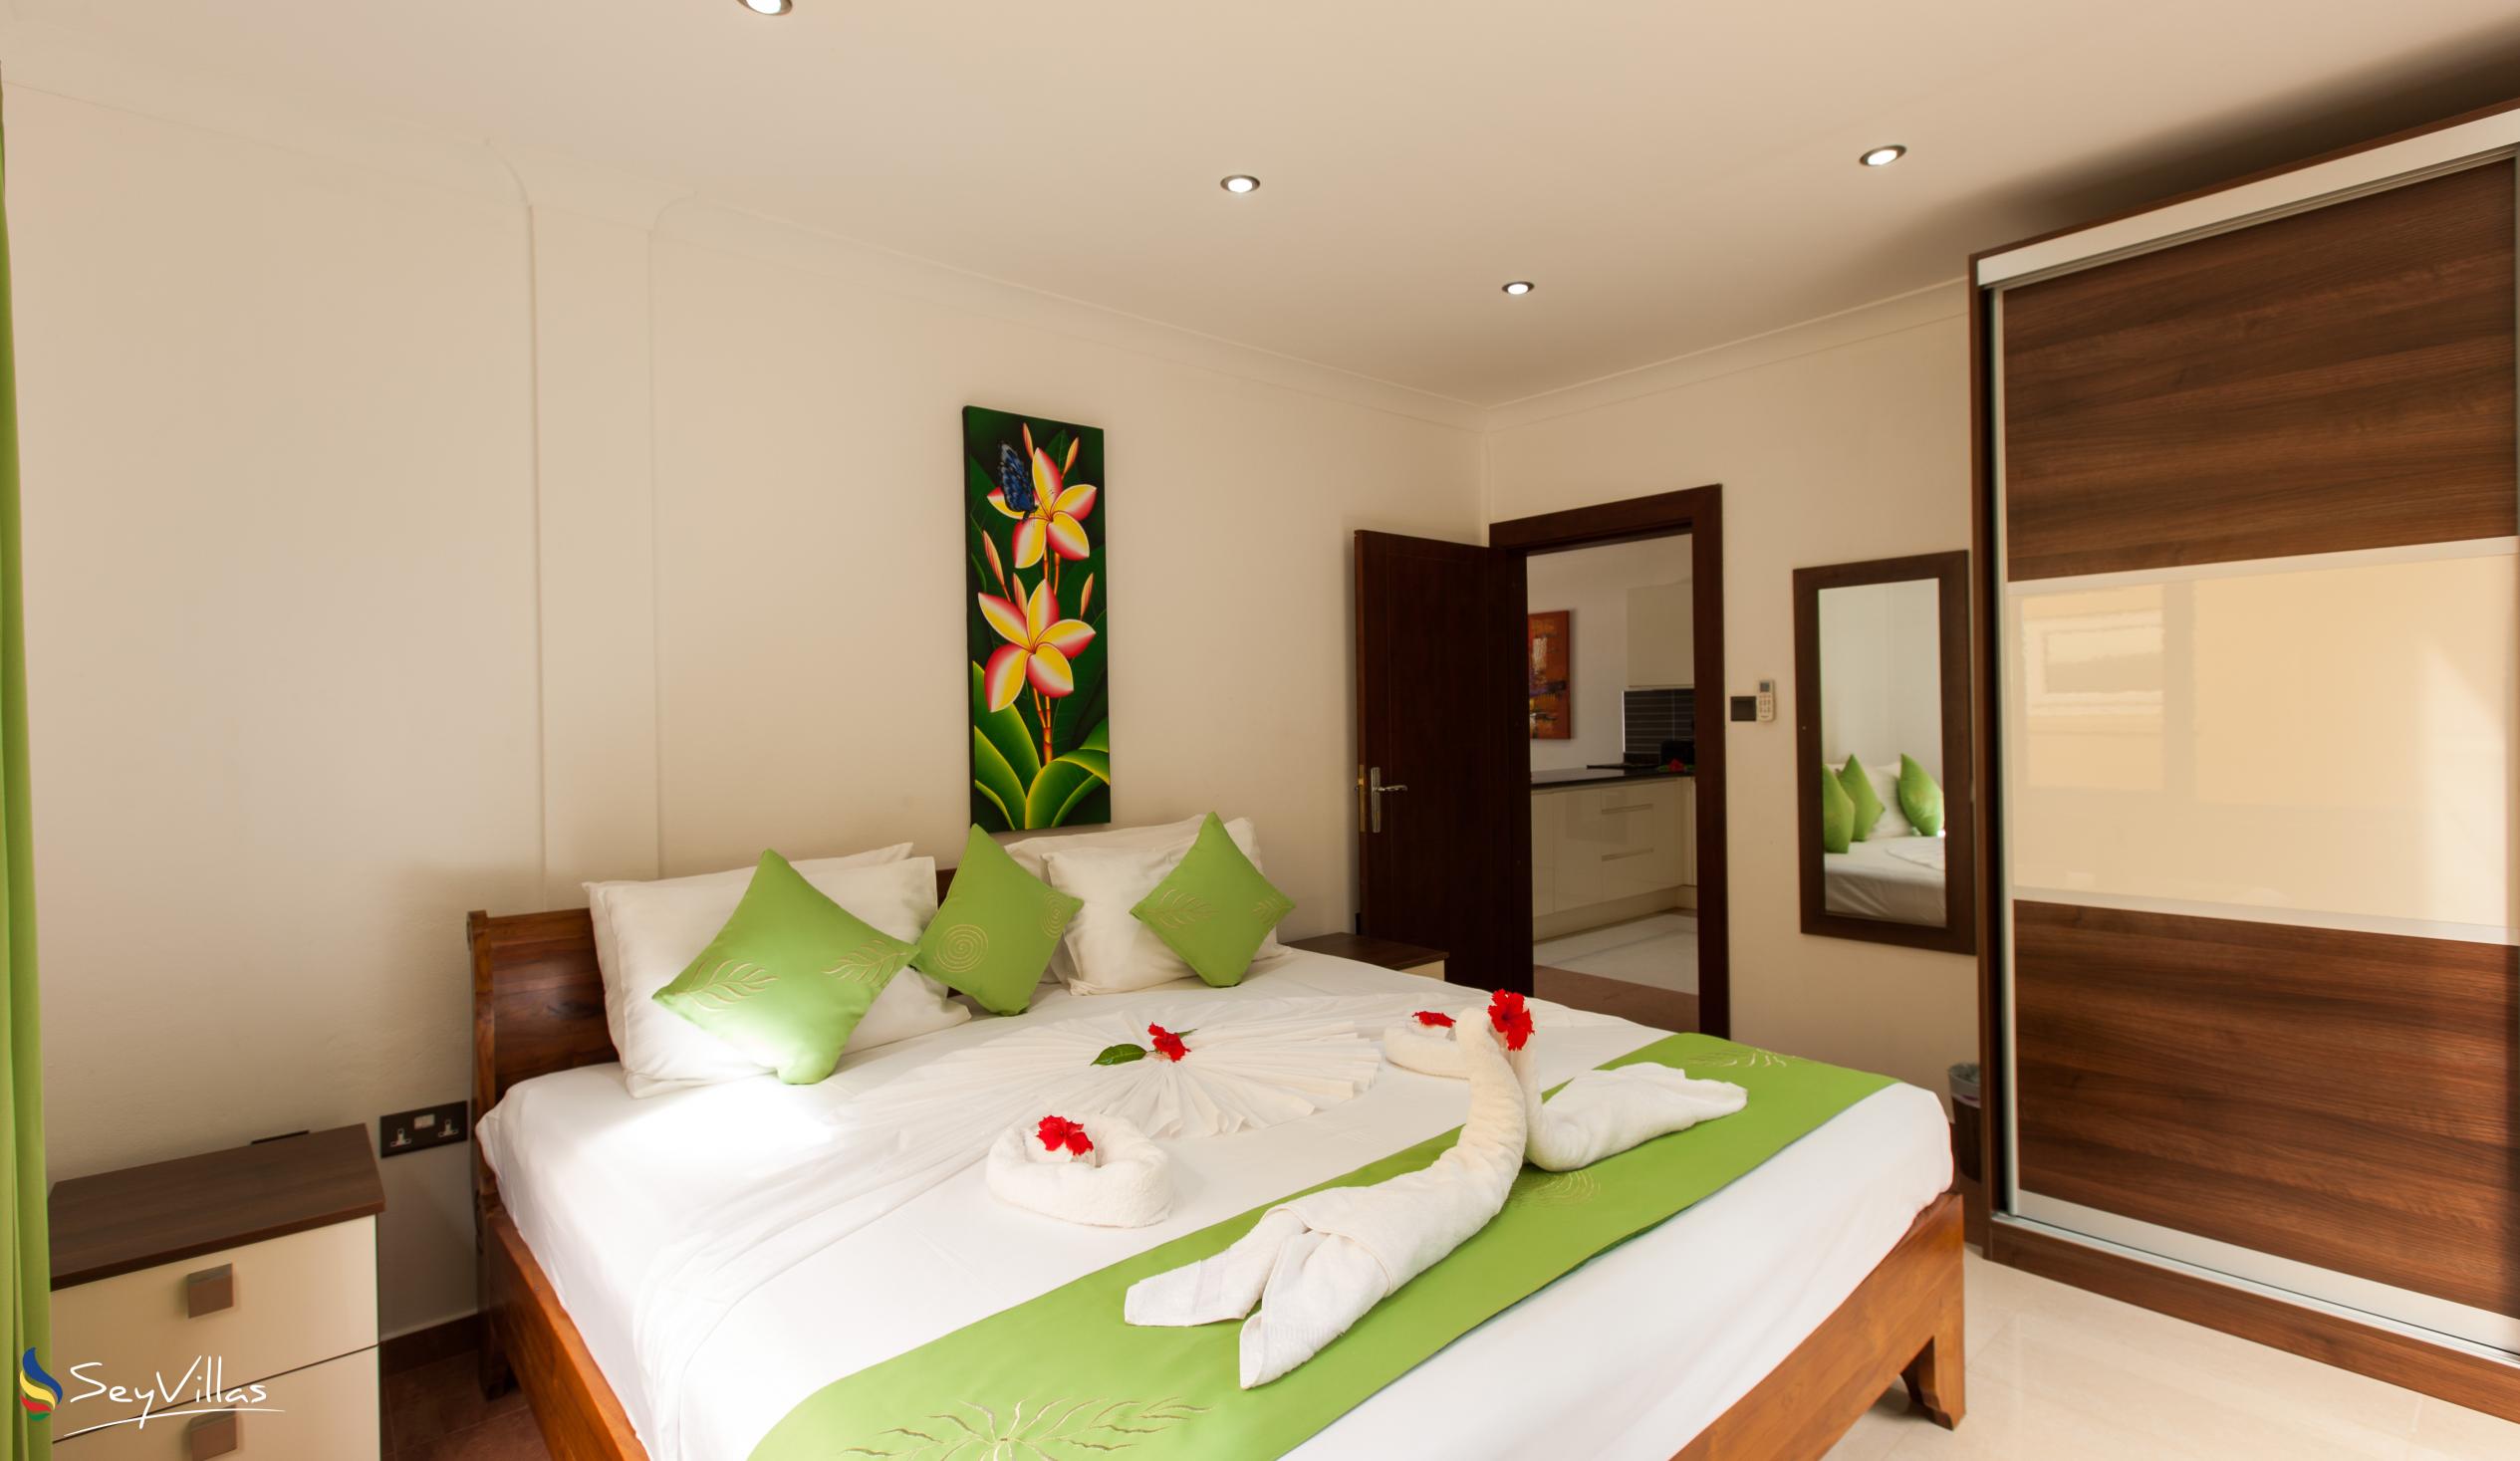 Foto 53: YASAD Luxury Beach Residence - Appartamento con 2 camere da letto - Praslin (Seychelles)